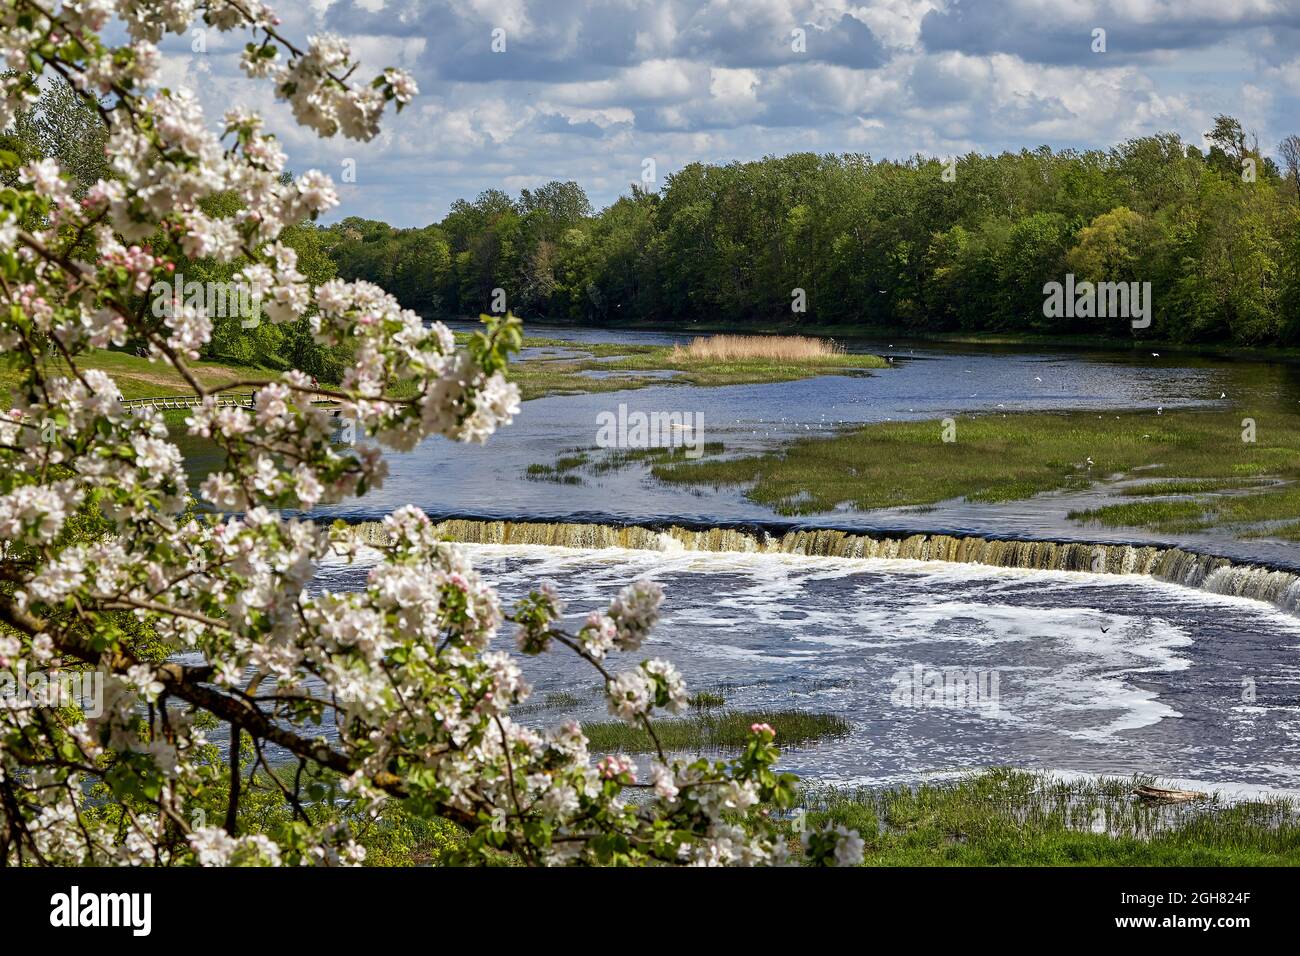 Venta Rapid, Latvian: Ventas rumba, is a waterfall on the Venta River in Kuldiga, Latvia. During the flowering of the apple tree Stock Photo